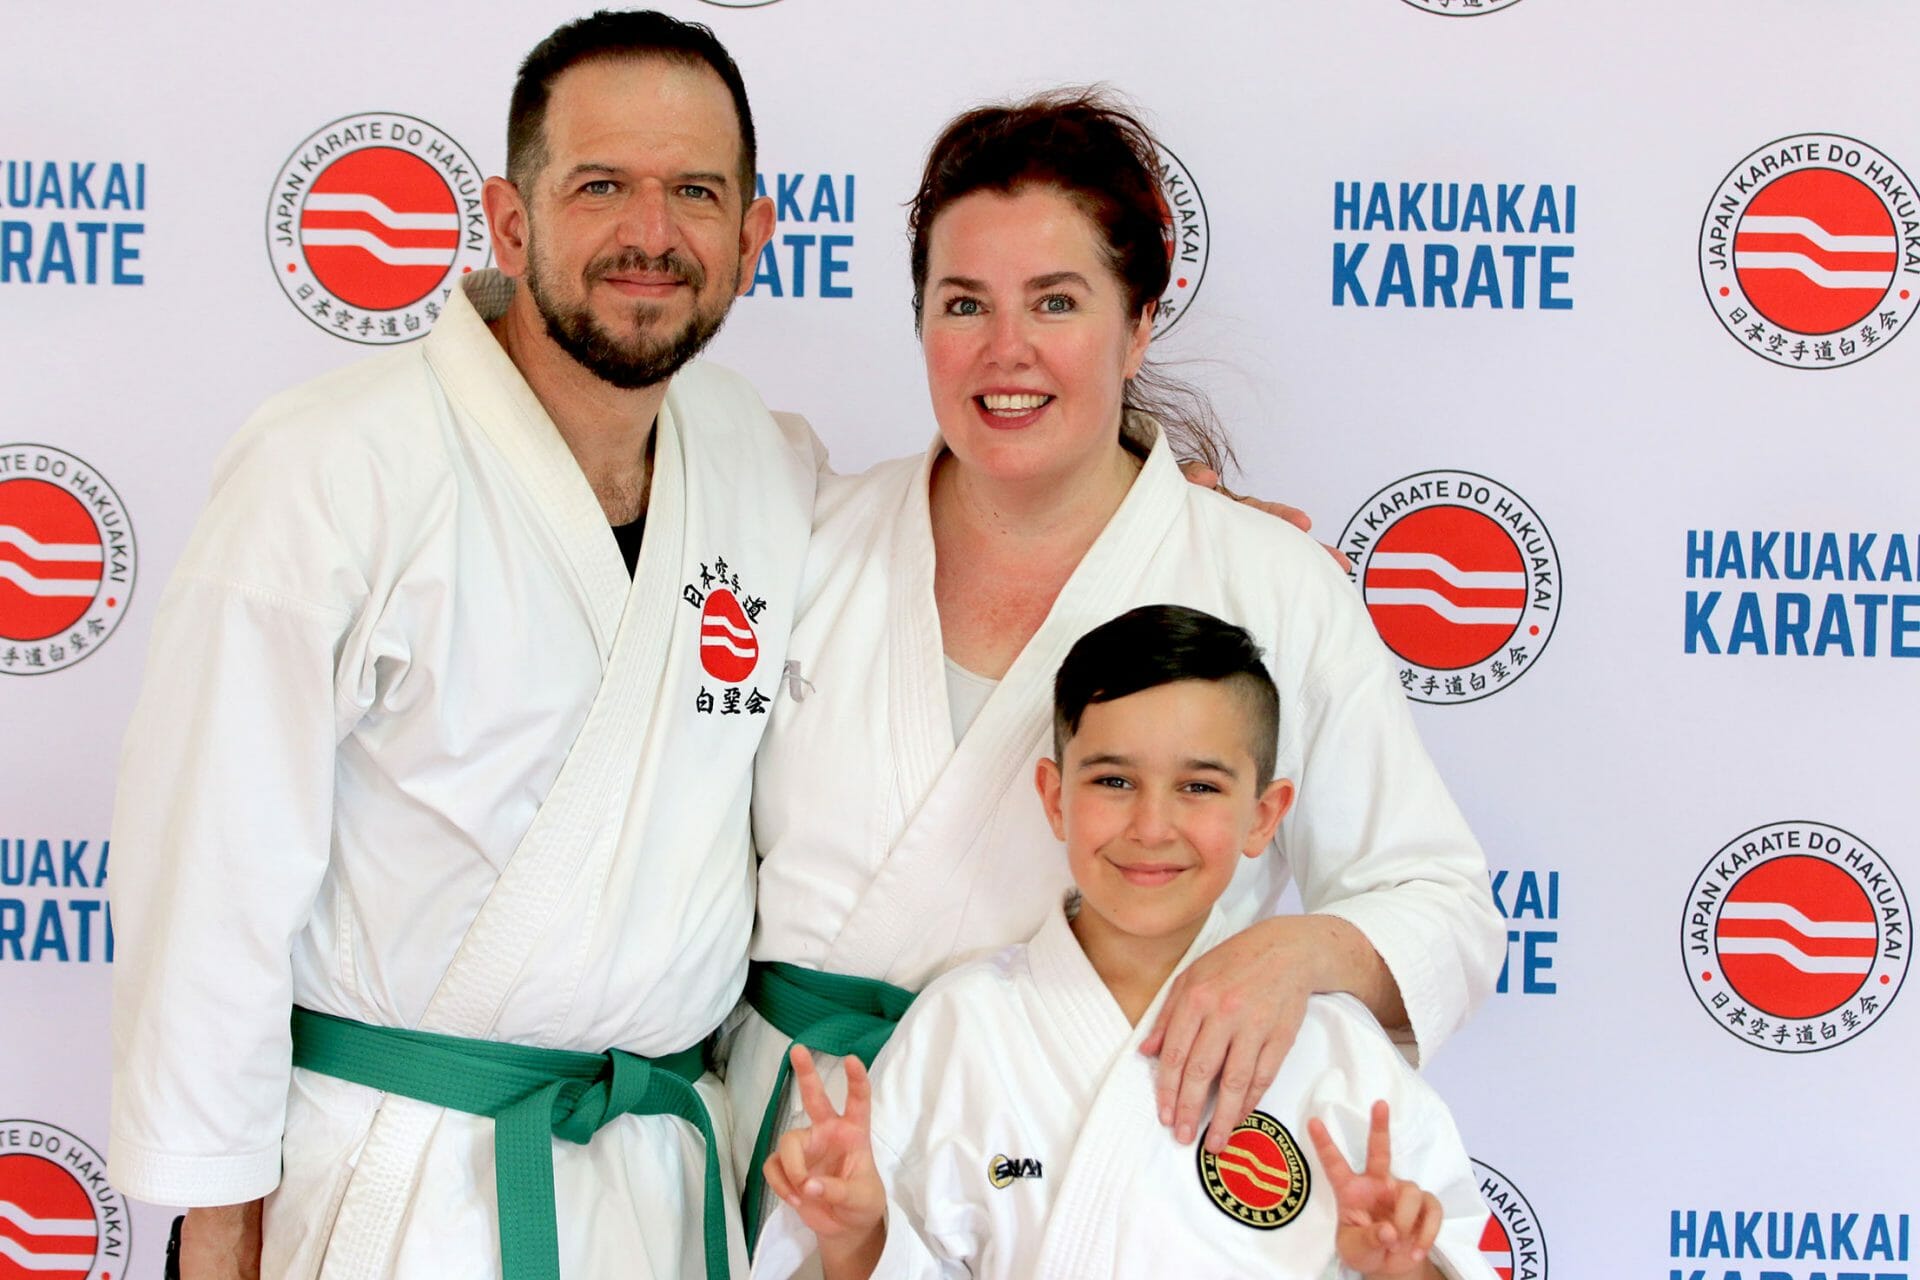 Family karate class